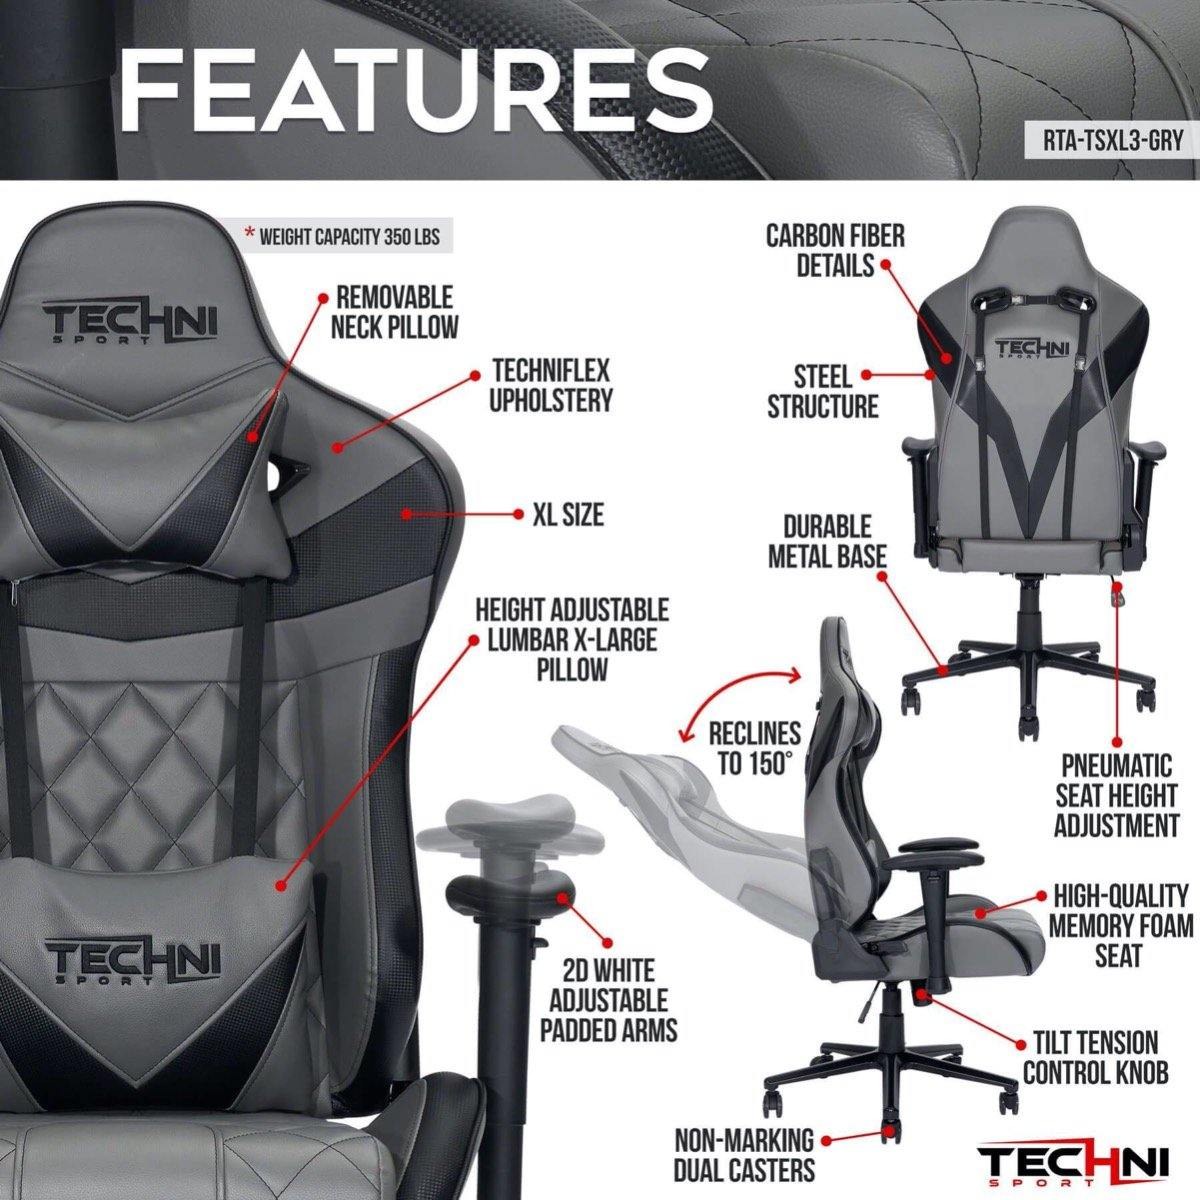 Techni Sport XL Gray Ergonomic Gaming Chair RTA-TSXL3-GRY Features